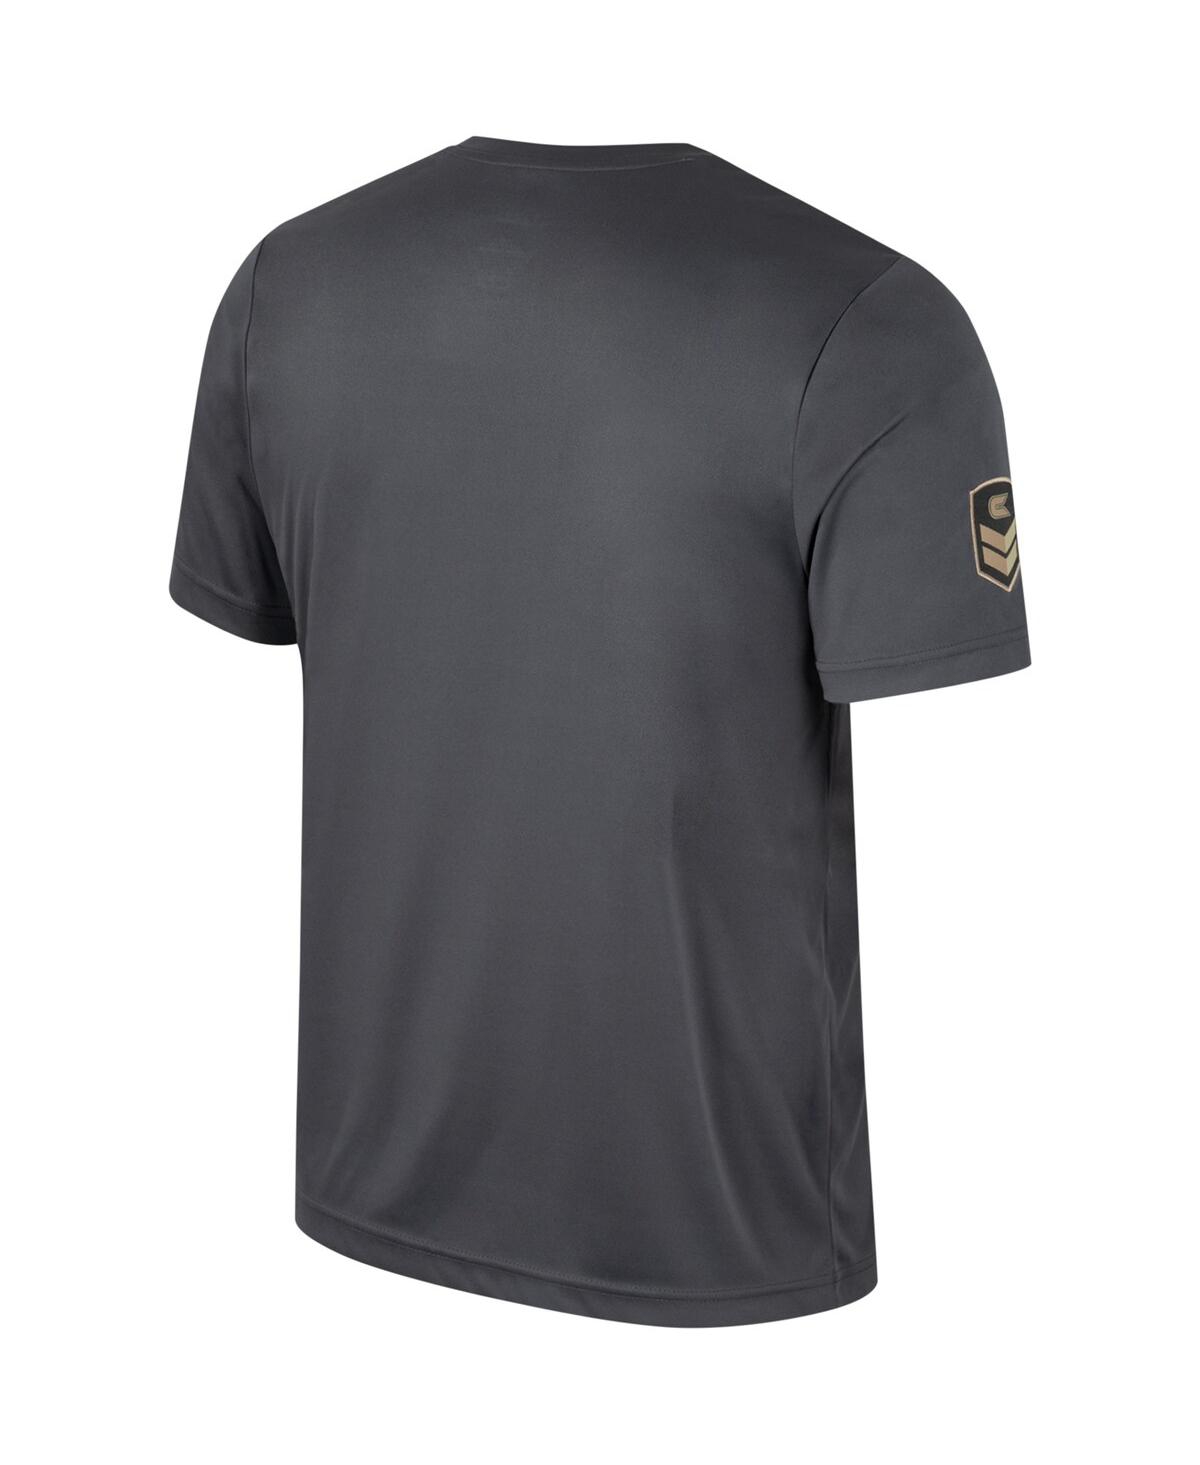 Shop Colosseum Men's  Charcoal Arizona Wildcats Oht Military-inspired Appreciation T-shirt